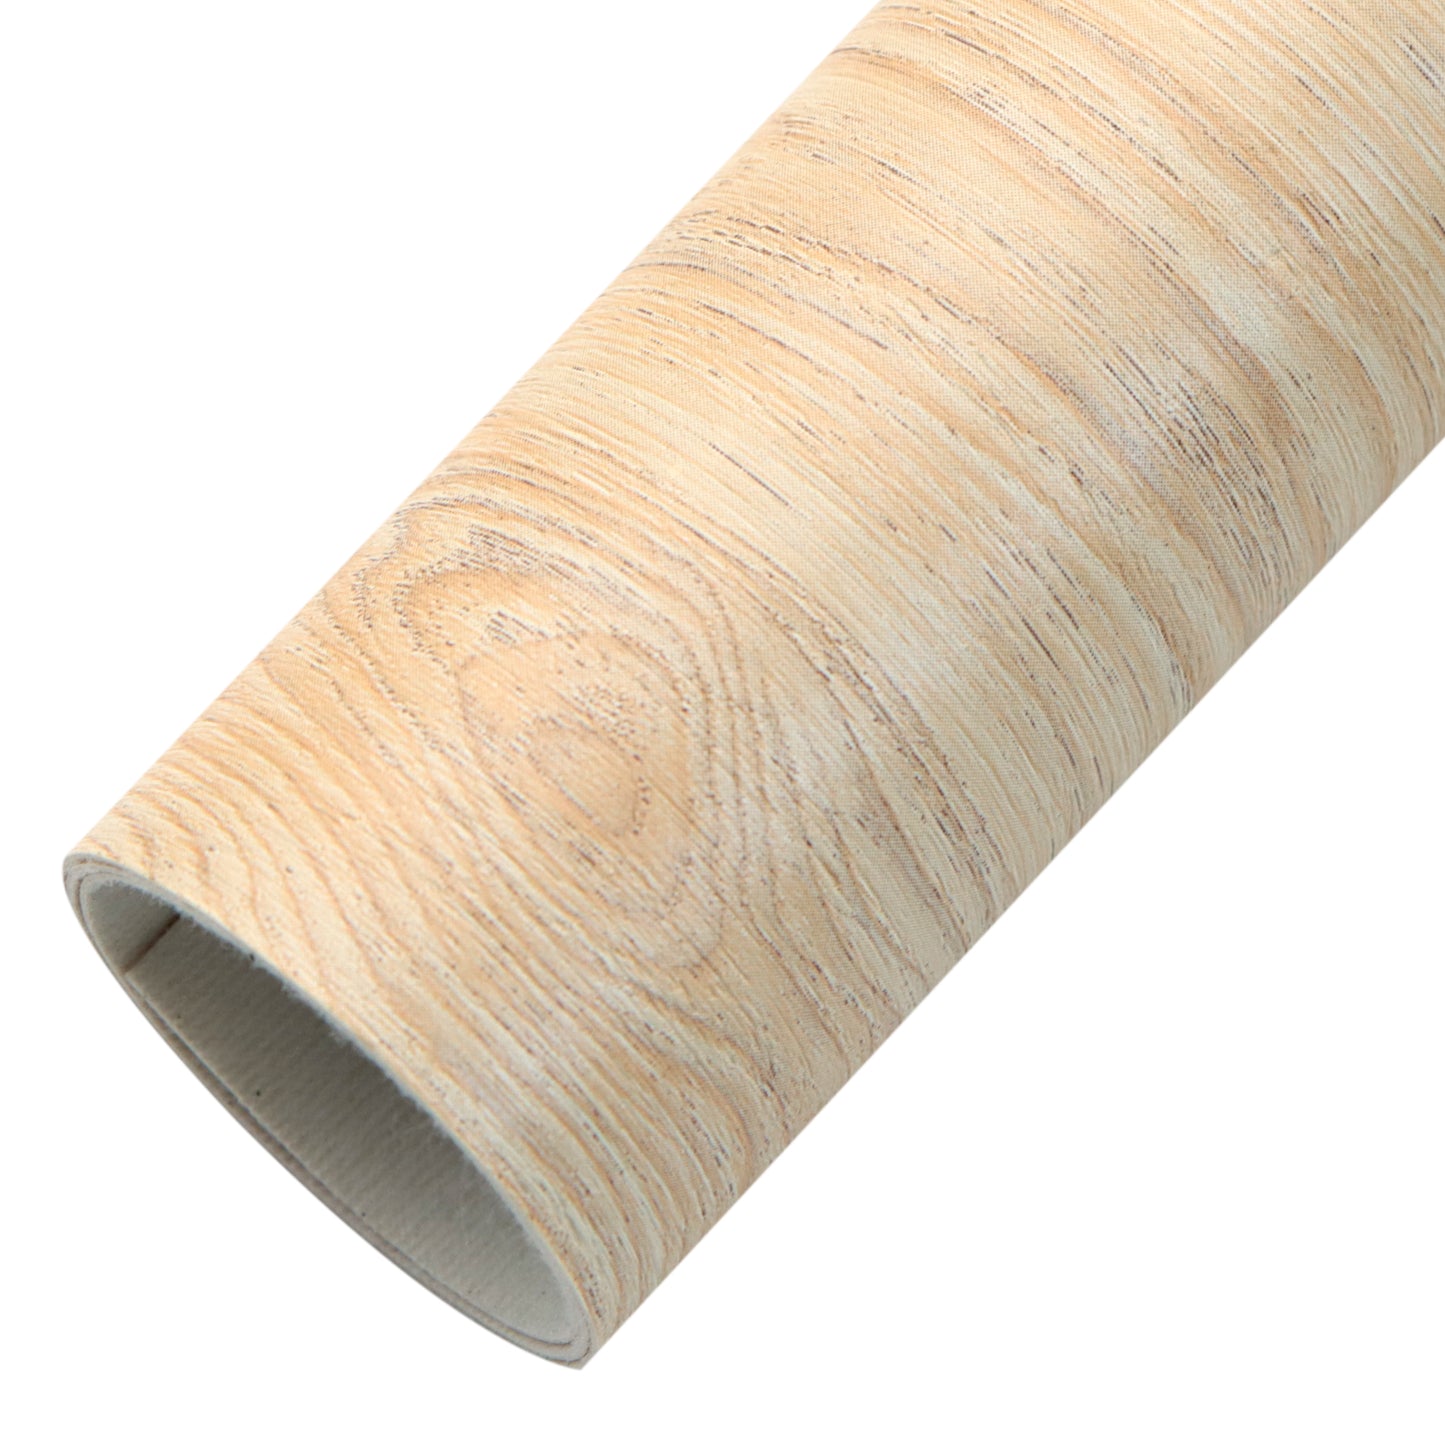 Bump Textured Wood Grain Faux Leather Sheets Wholesale